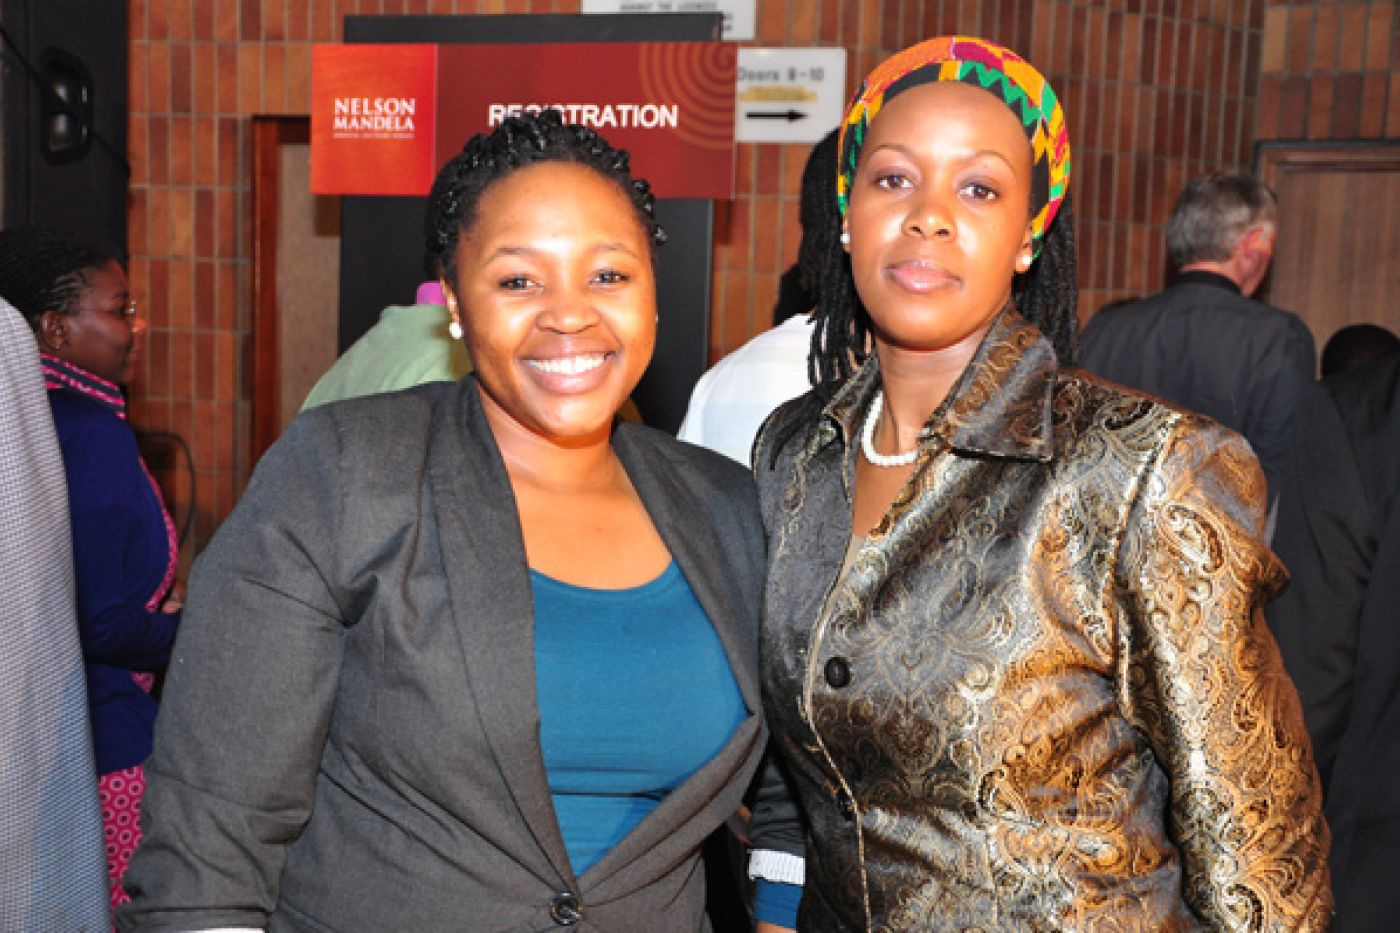 Zamanyuswa Nyuswa (left) and Kgopedi oa Namane, both from Metro FM